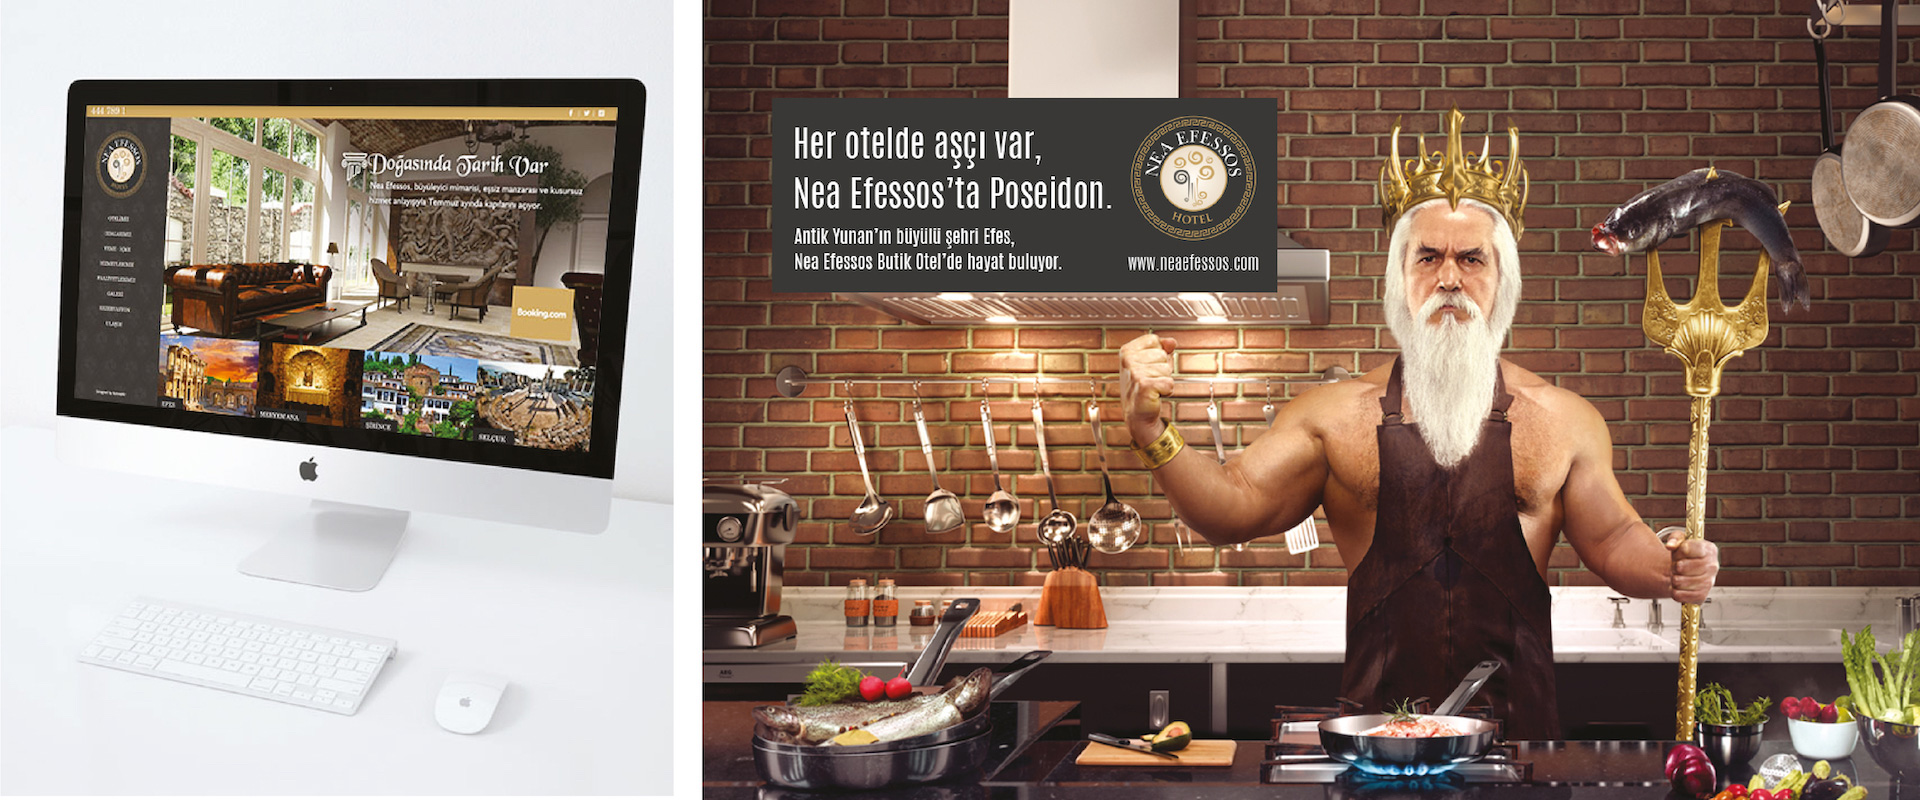 Nea Efessos - KONSEPTIZ Advertising Agency in Turkey